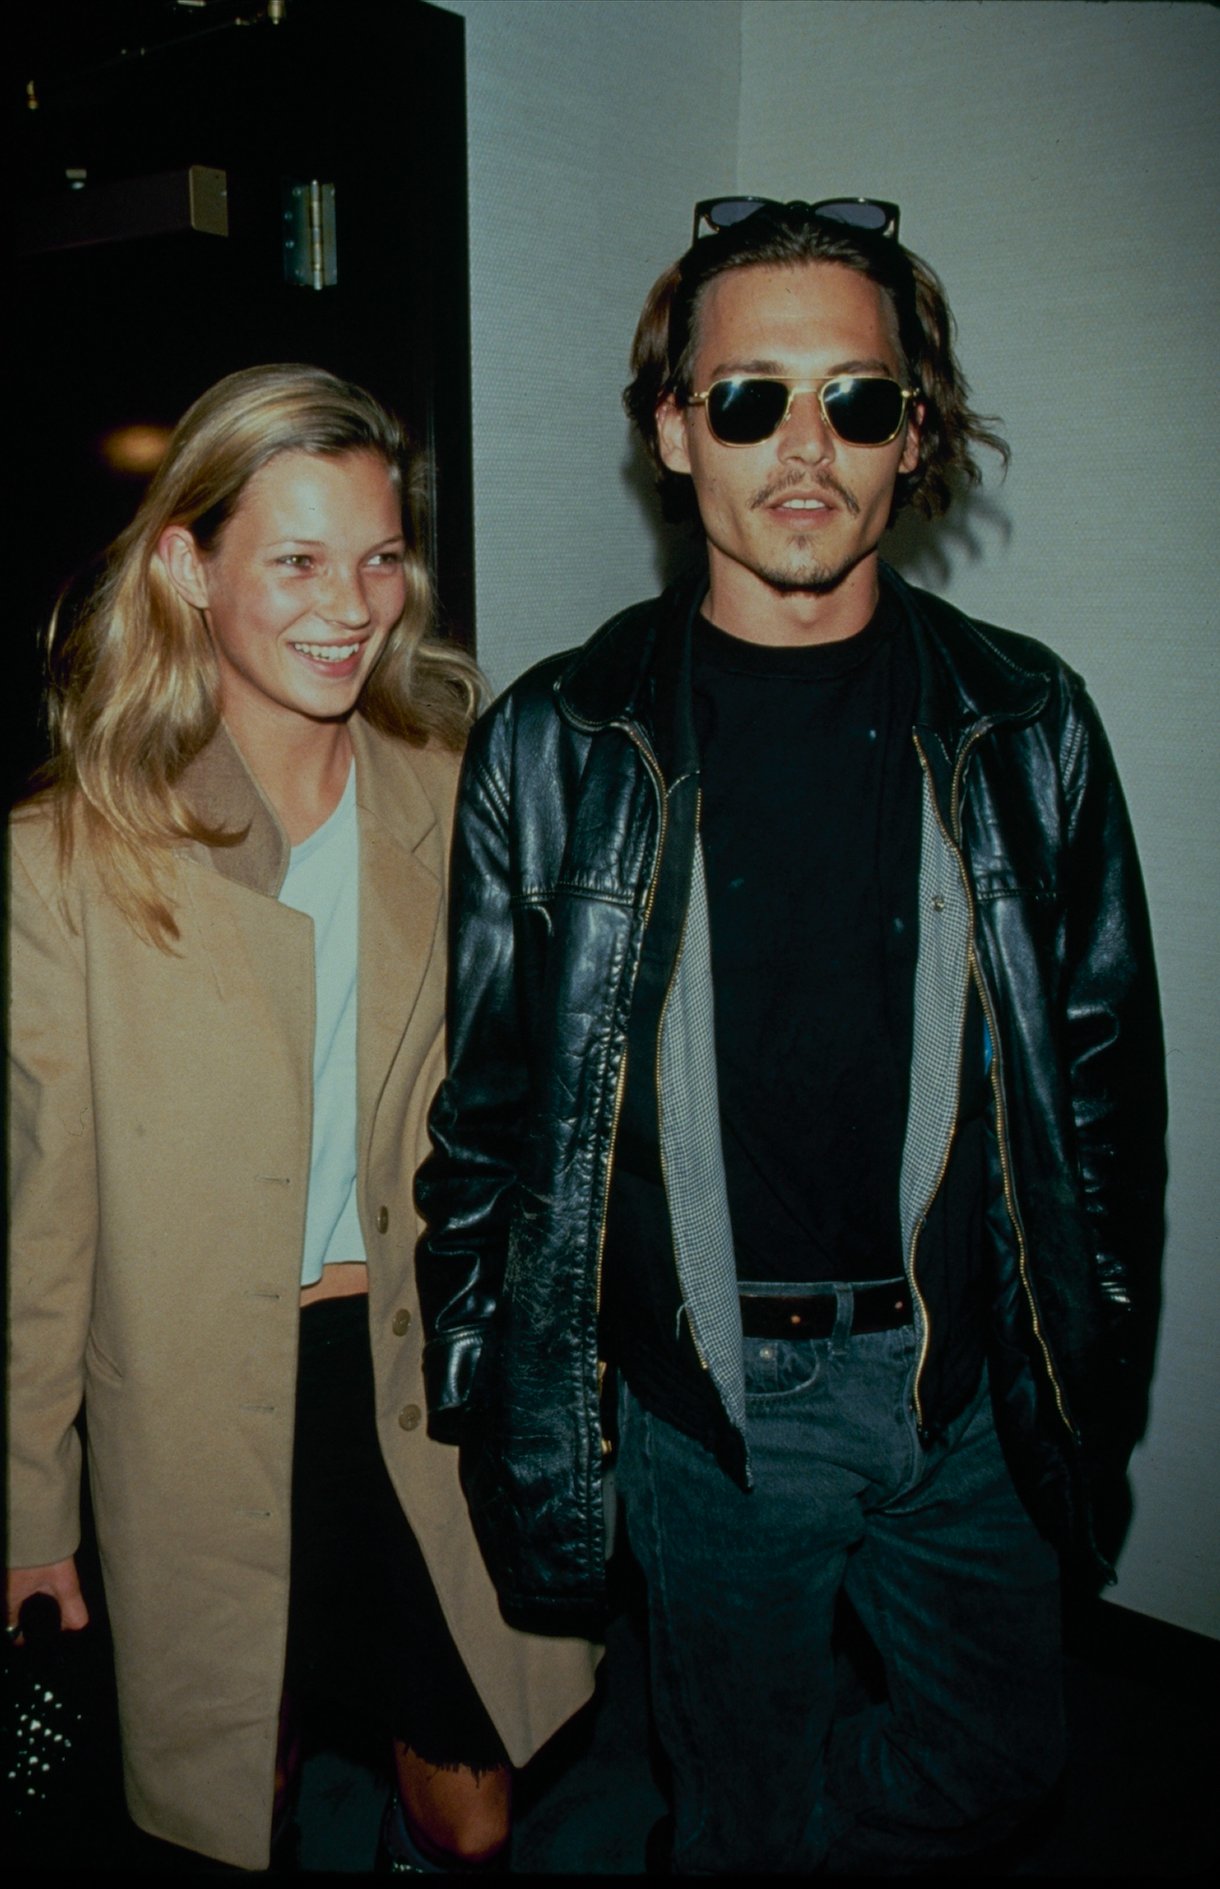 circa 1995: Johnny Depp and model Kate Moss